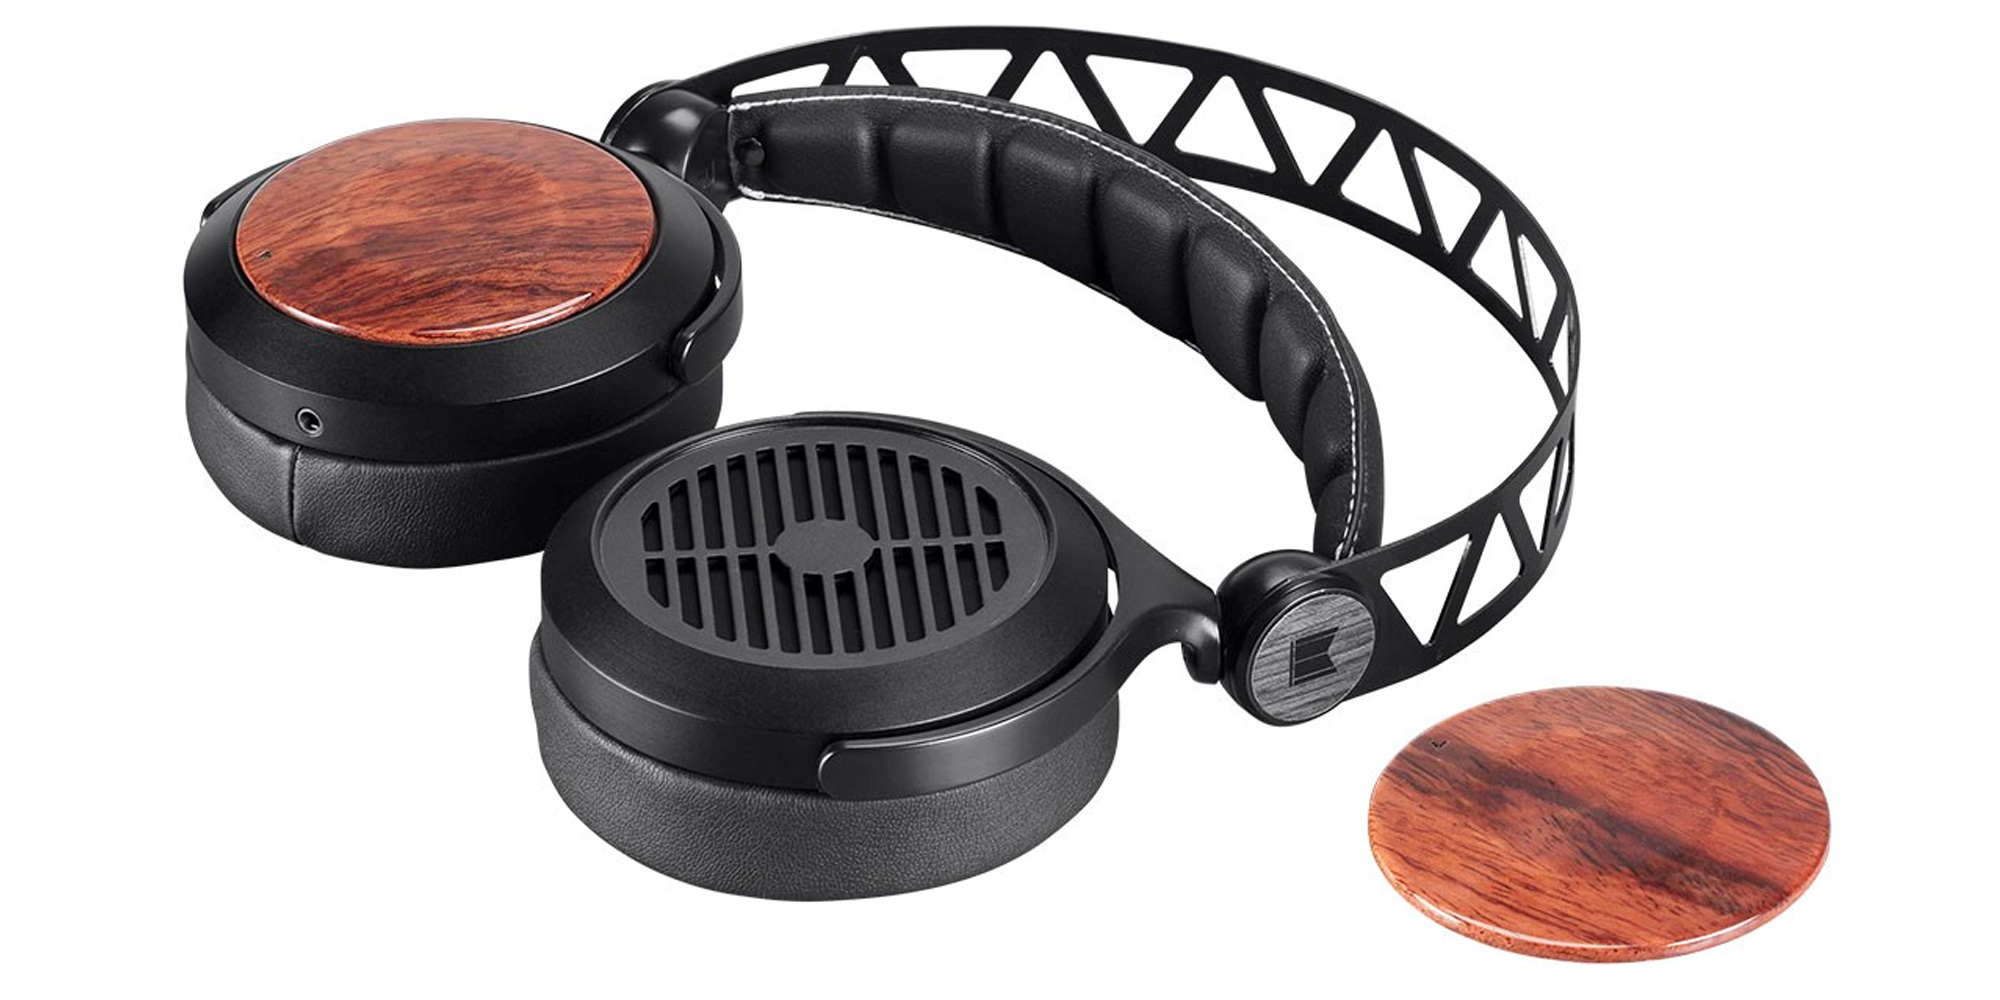 Monoprice's Monolith M560 Planar headphones drop to $150 shipped